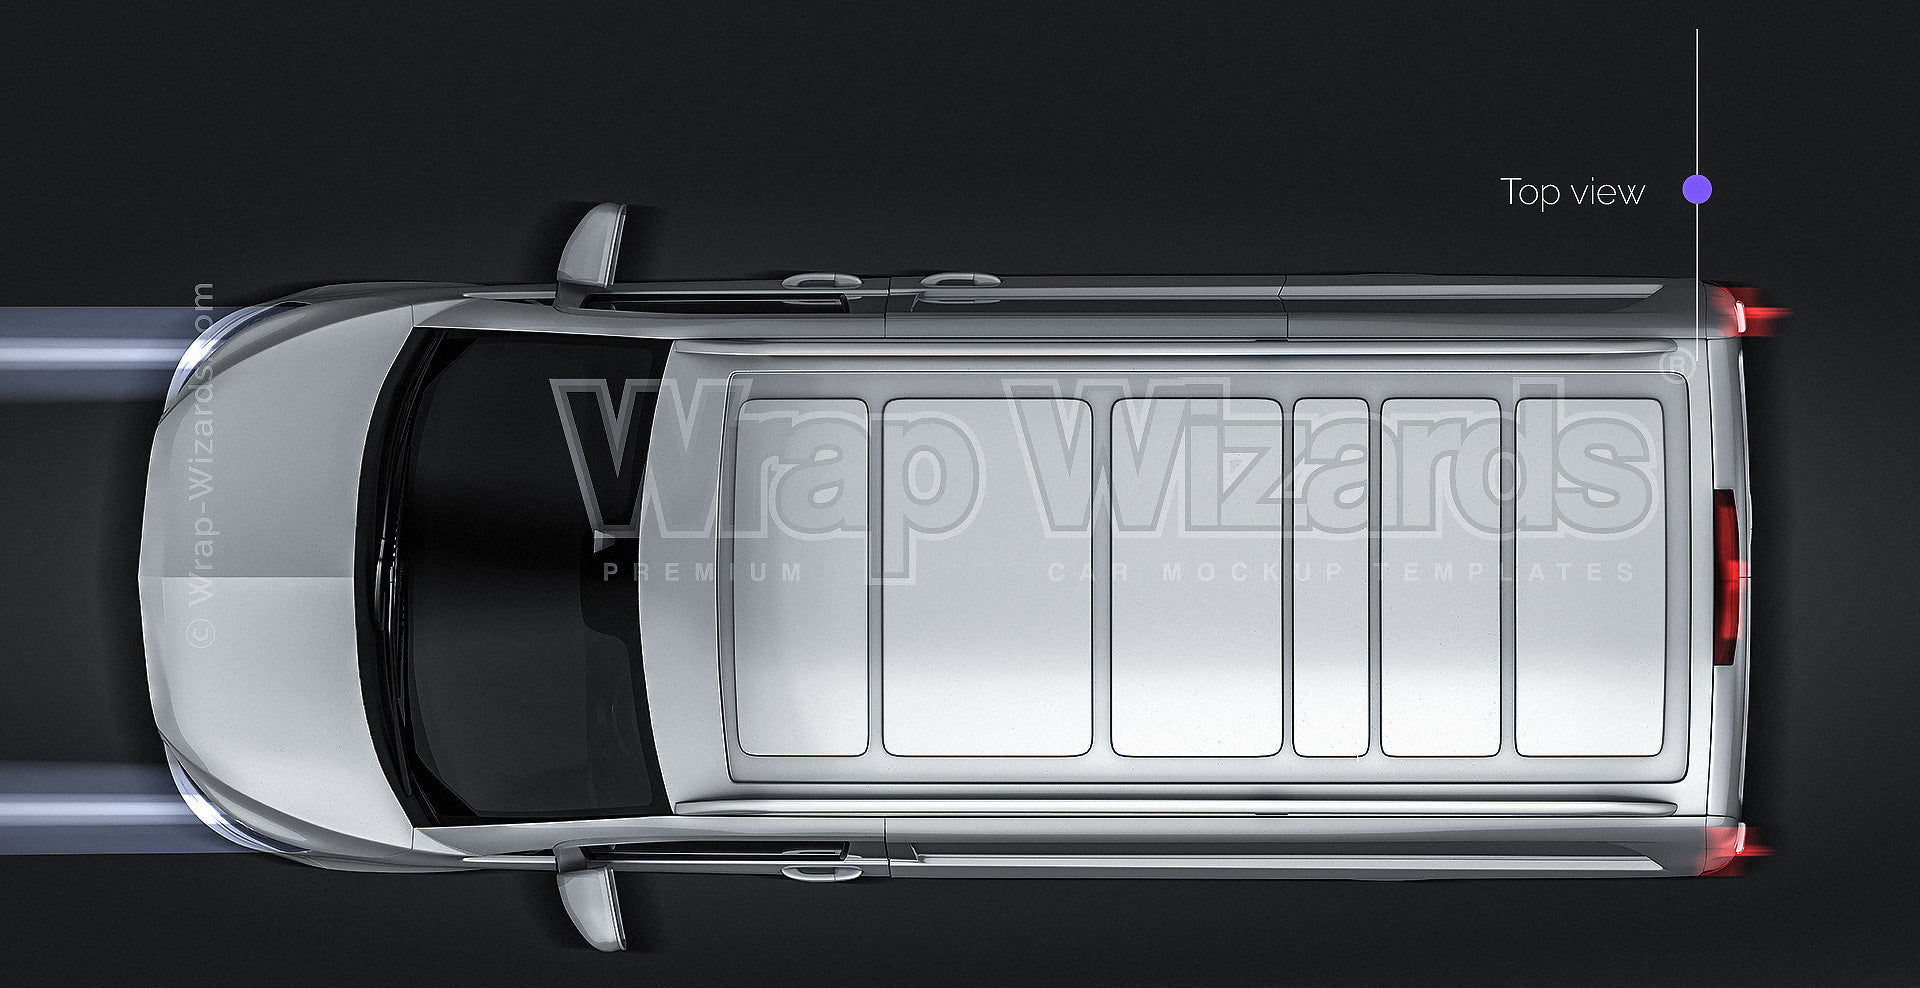 Mercedes-Benz Vito Panel Van 2016 glossy finish - all sides Car Mockup Template.psd